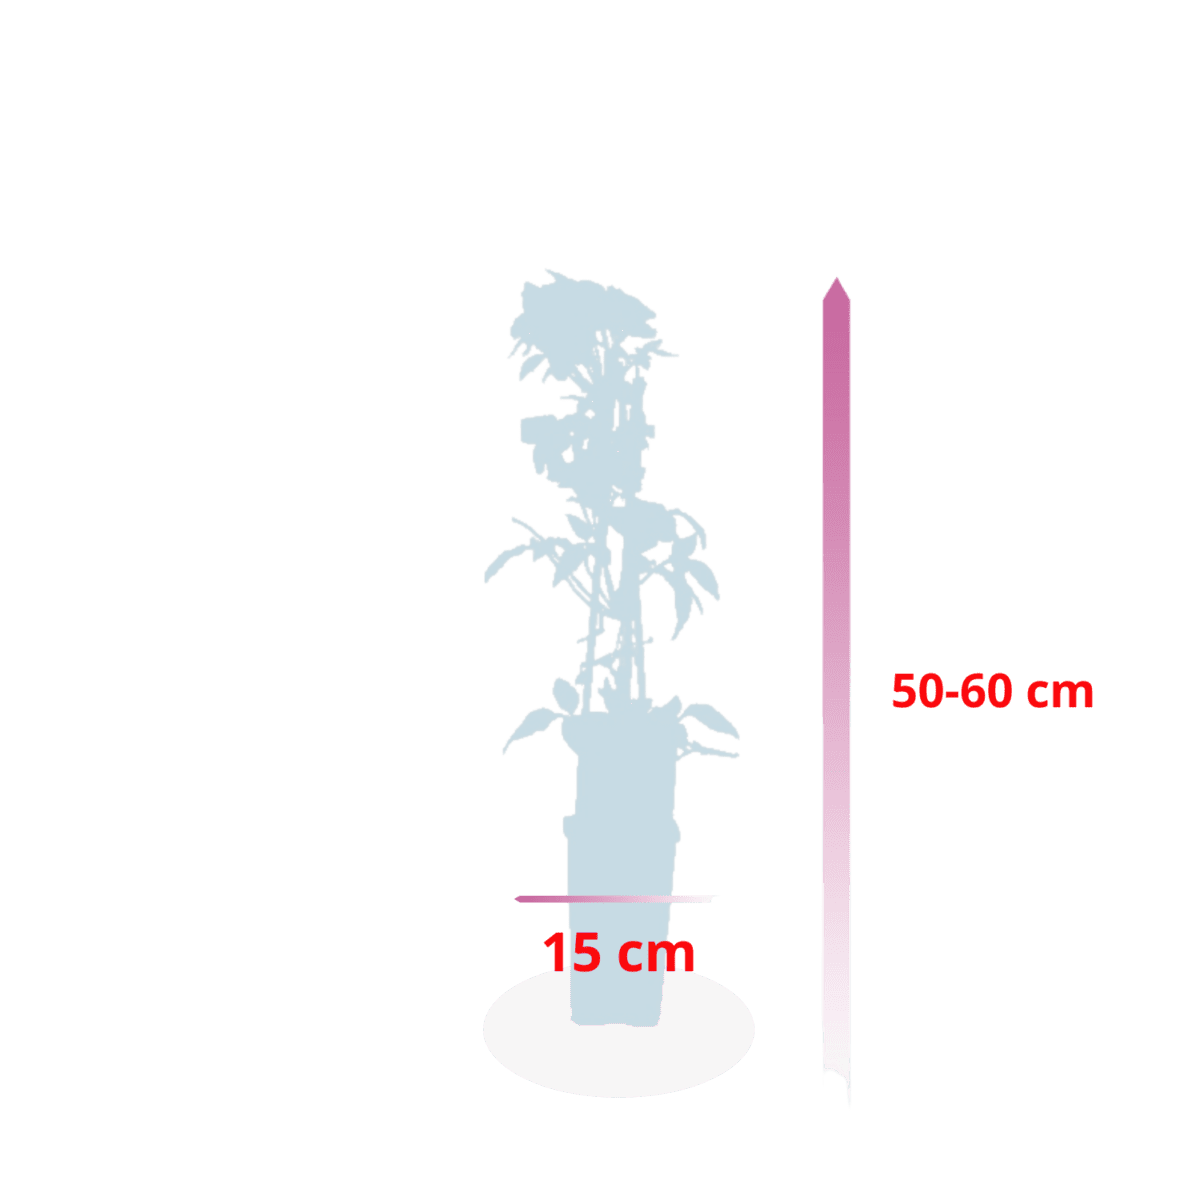 Clematis mayleen - klimplant - tuinplant